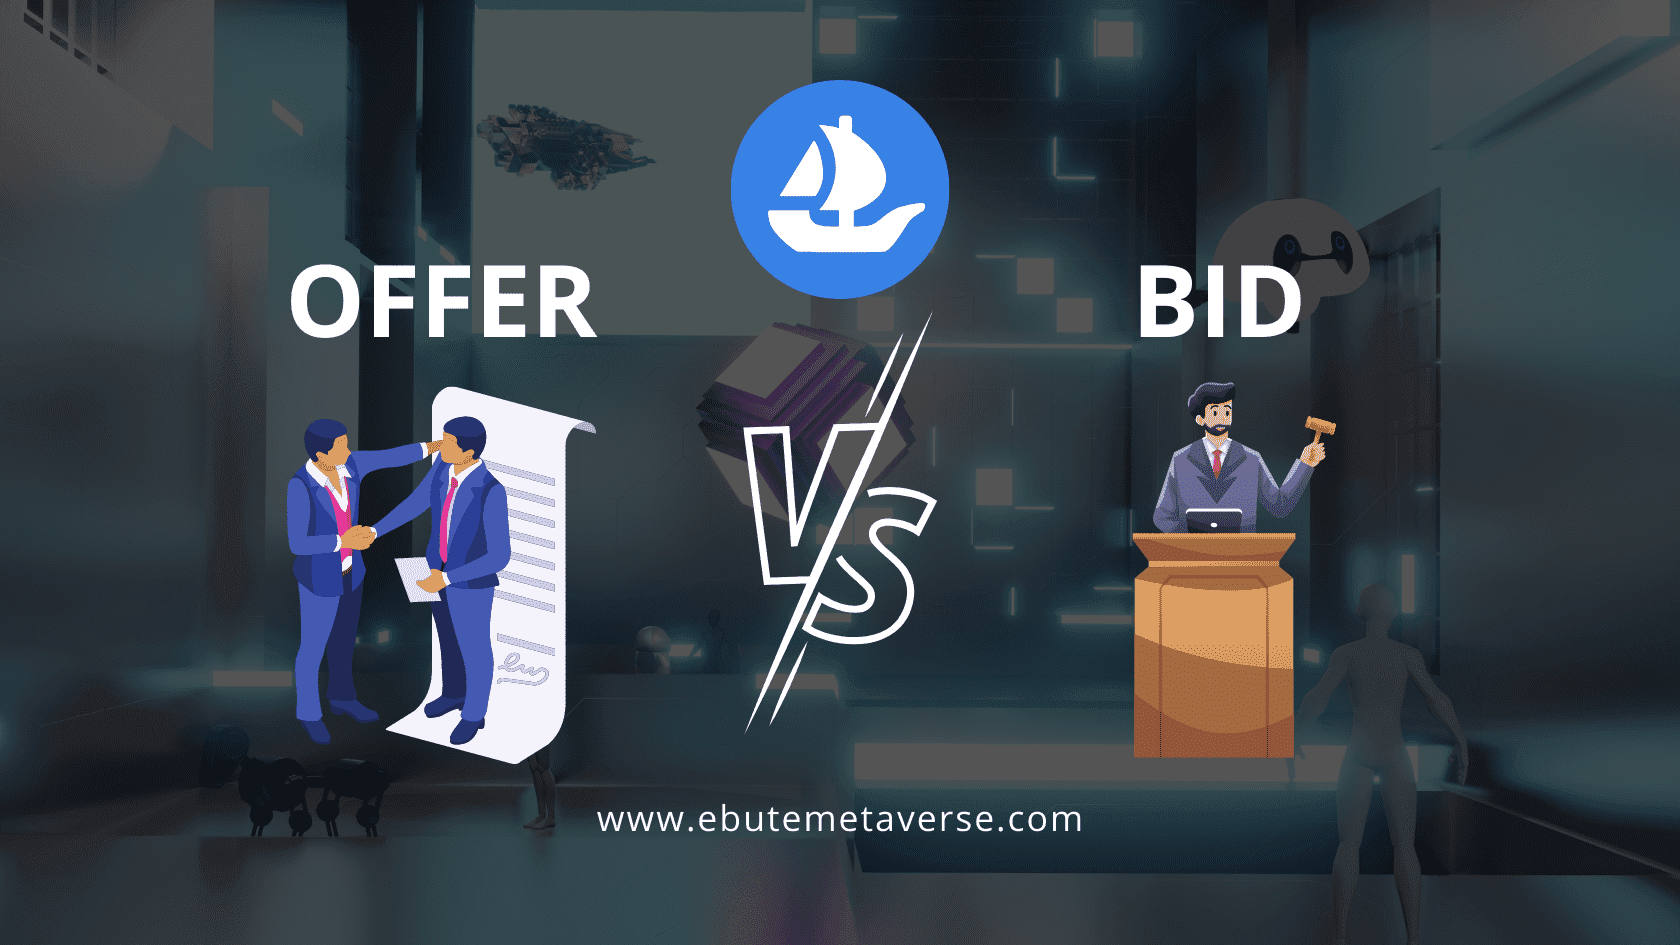 opensea offer vs bid cover 1